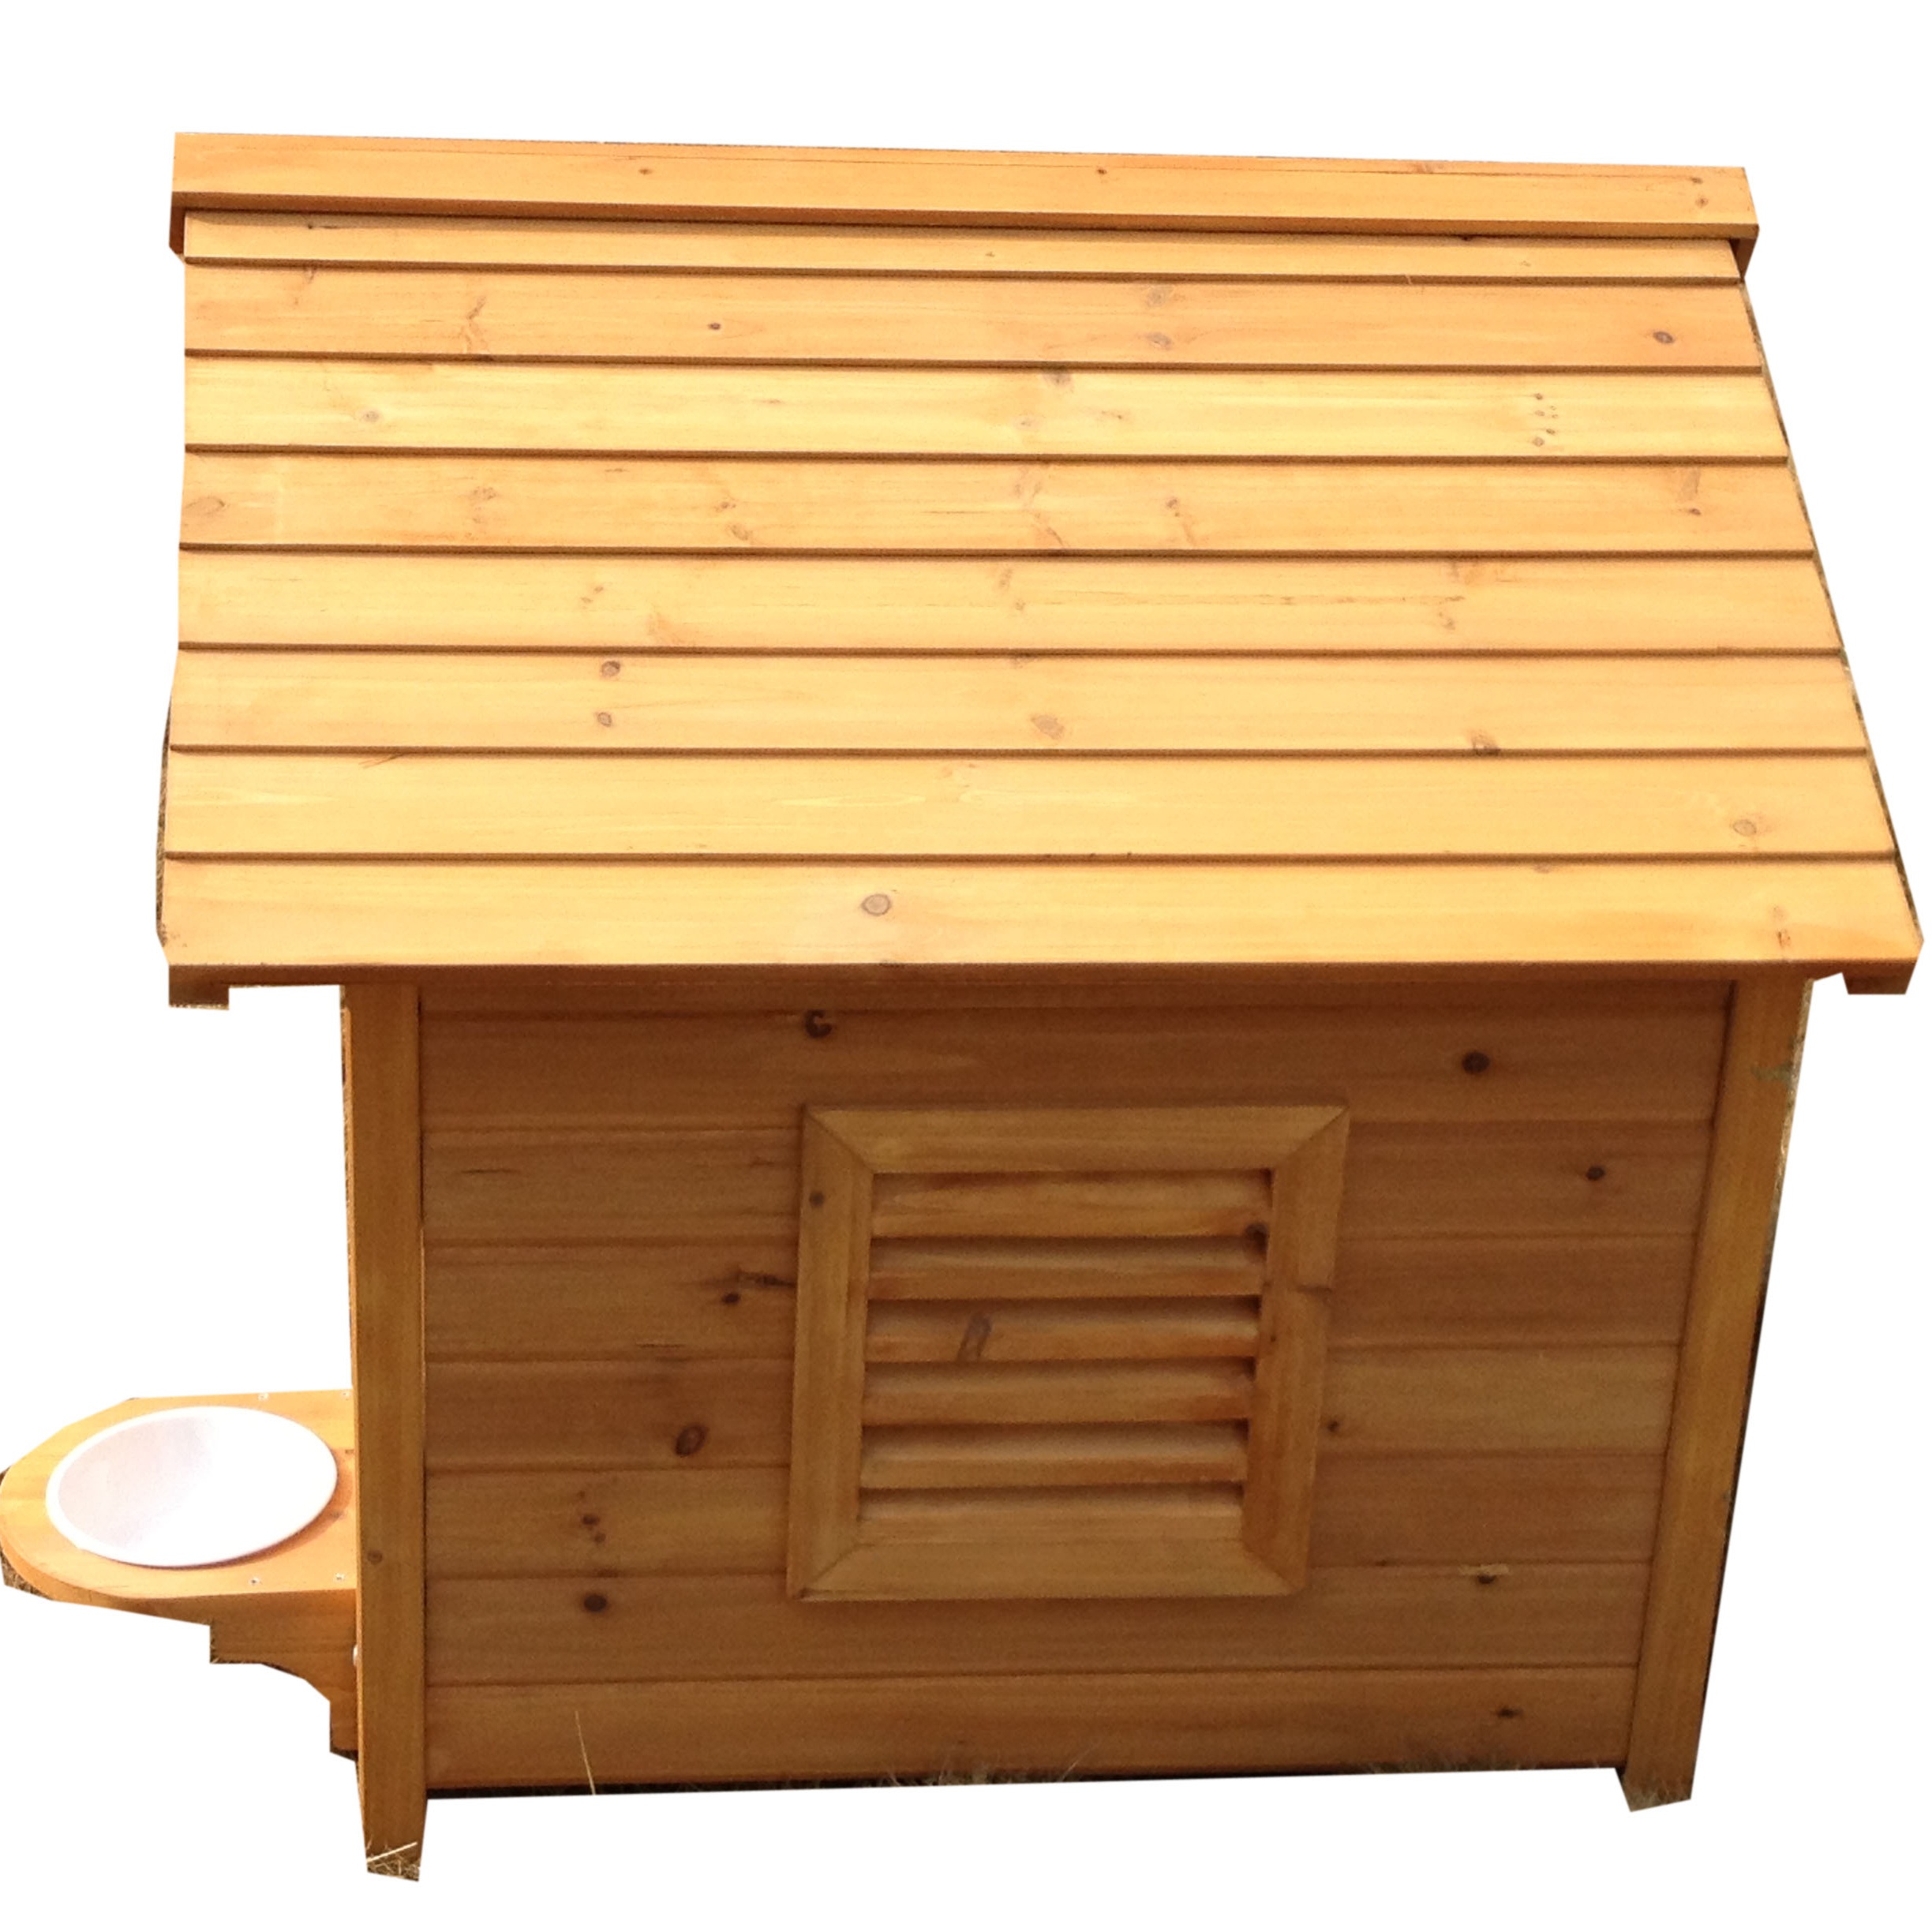 Custom handmade wooden double decker dog houses outdoors